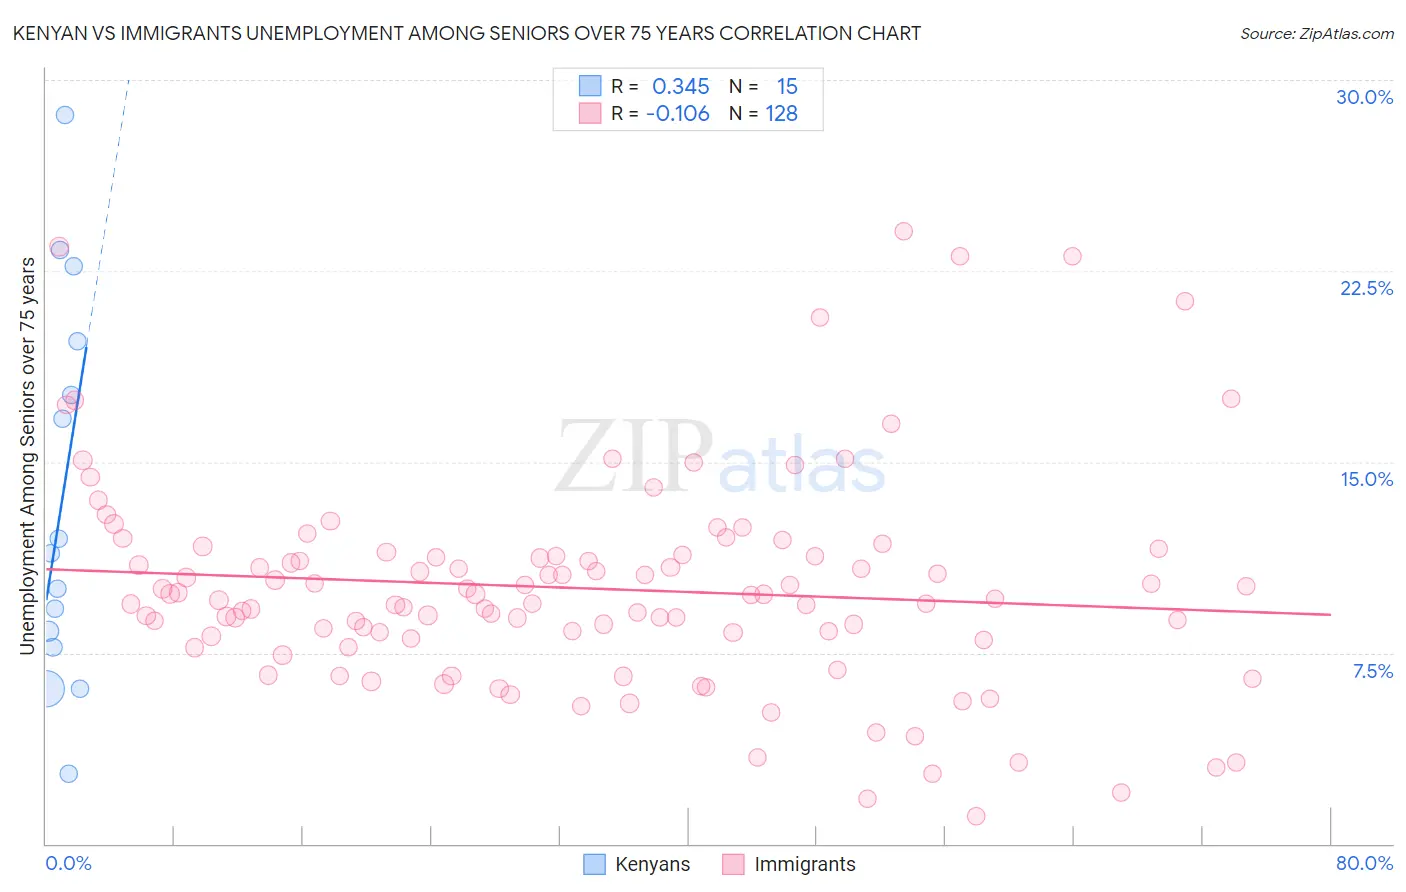 Kenyan vs Immigrants Unemployment Among Seniors over 75 years